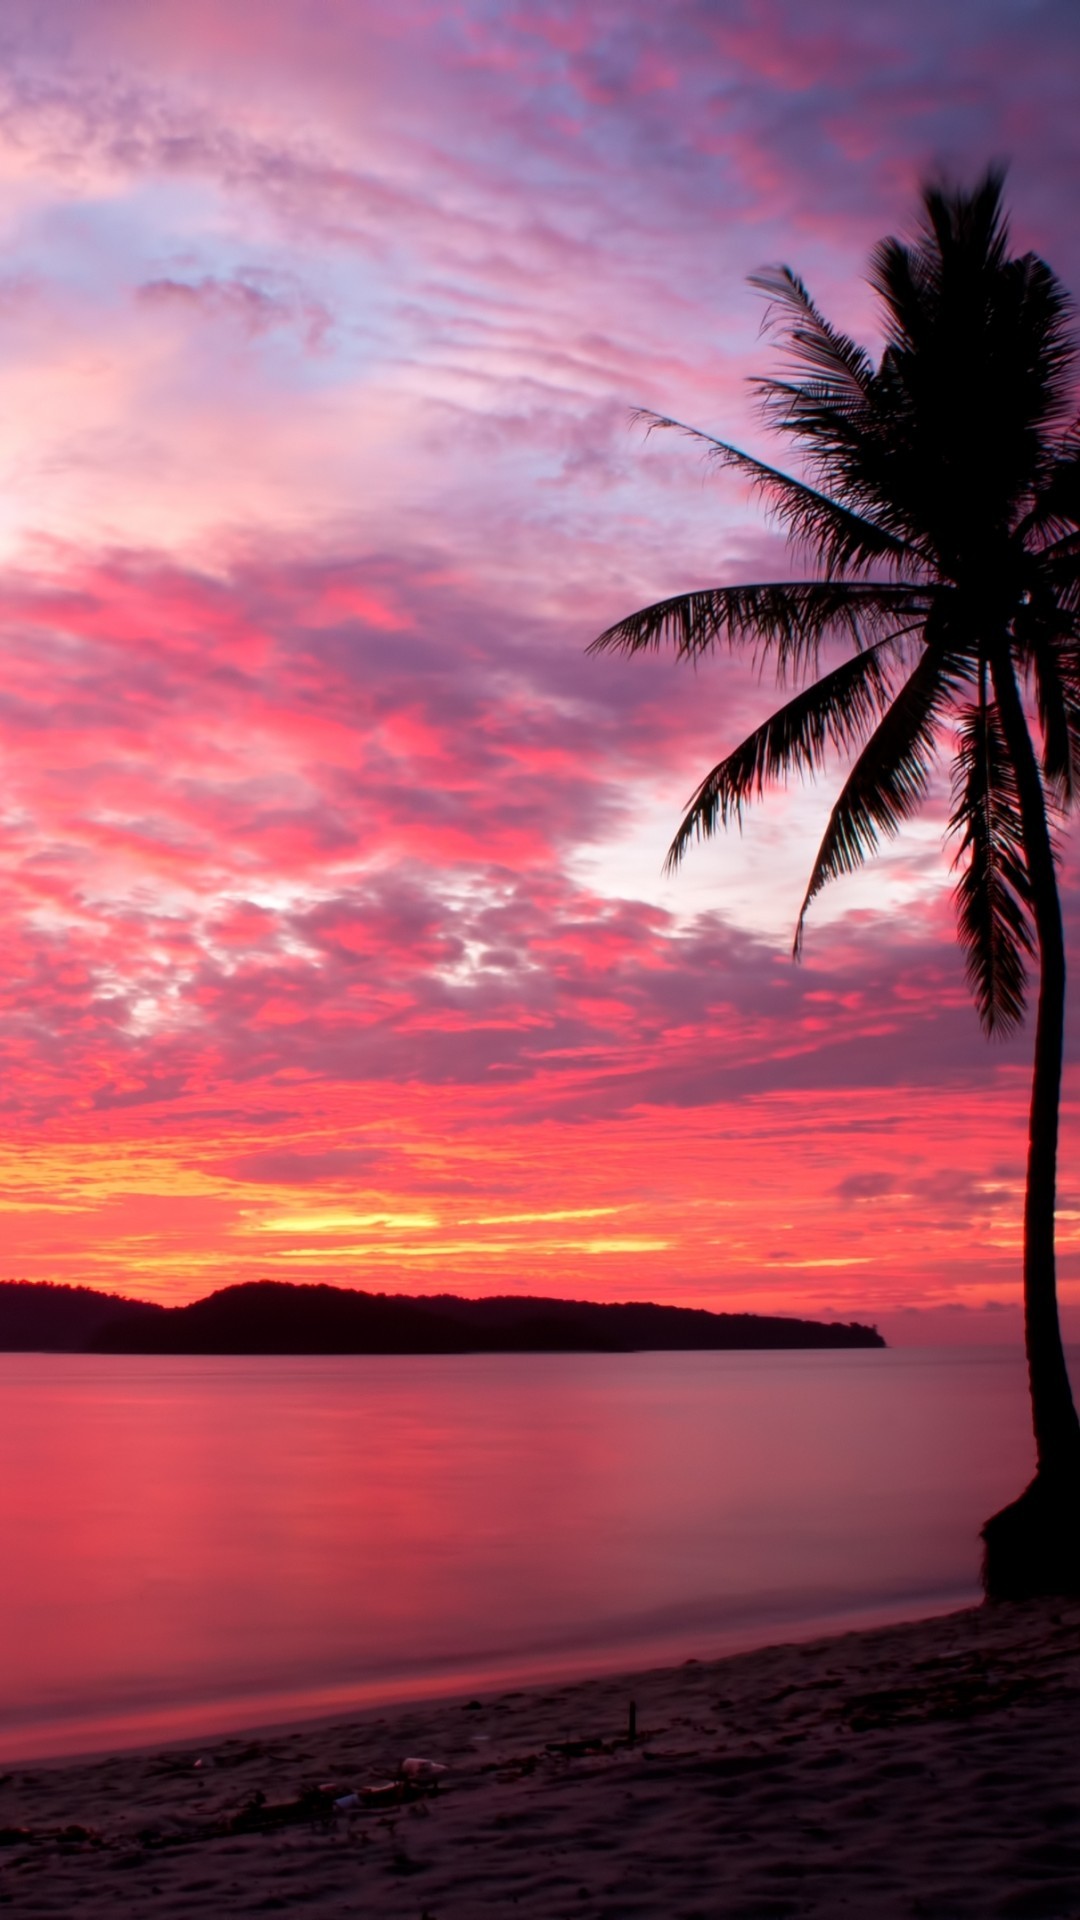 Ocean Sunset Wallpaper Iphone X - Rehare